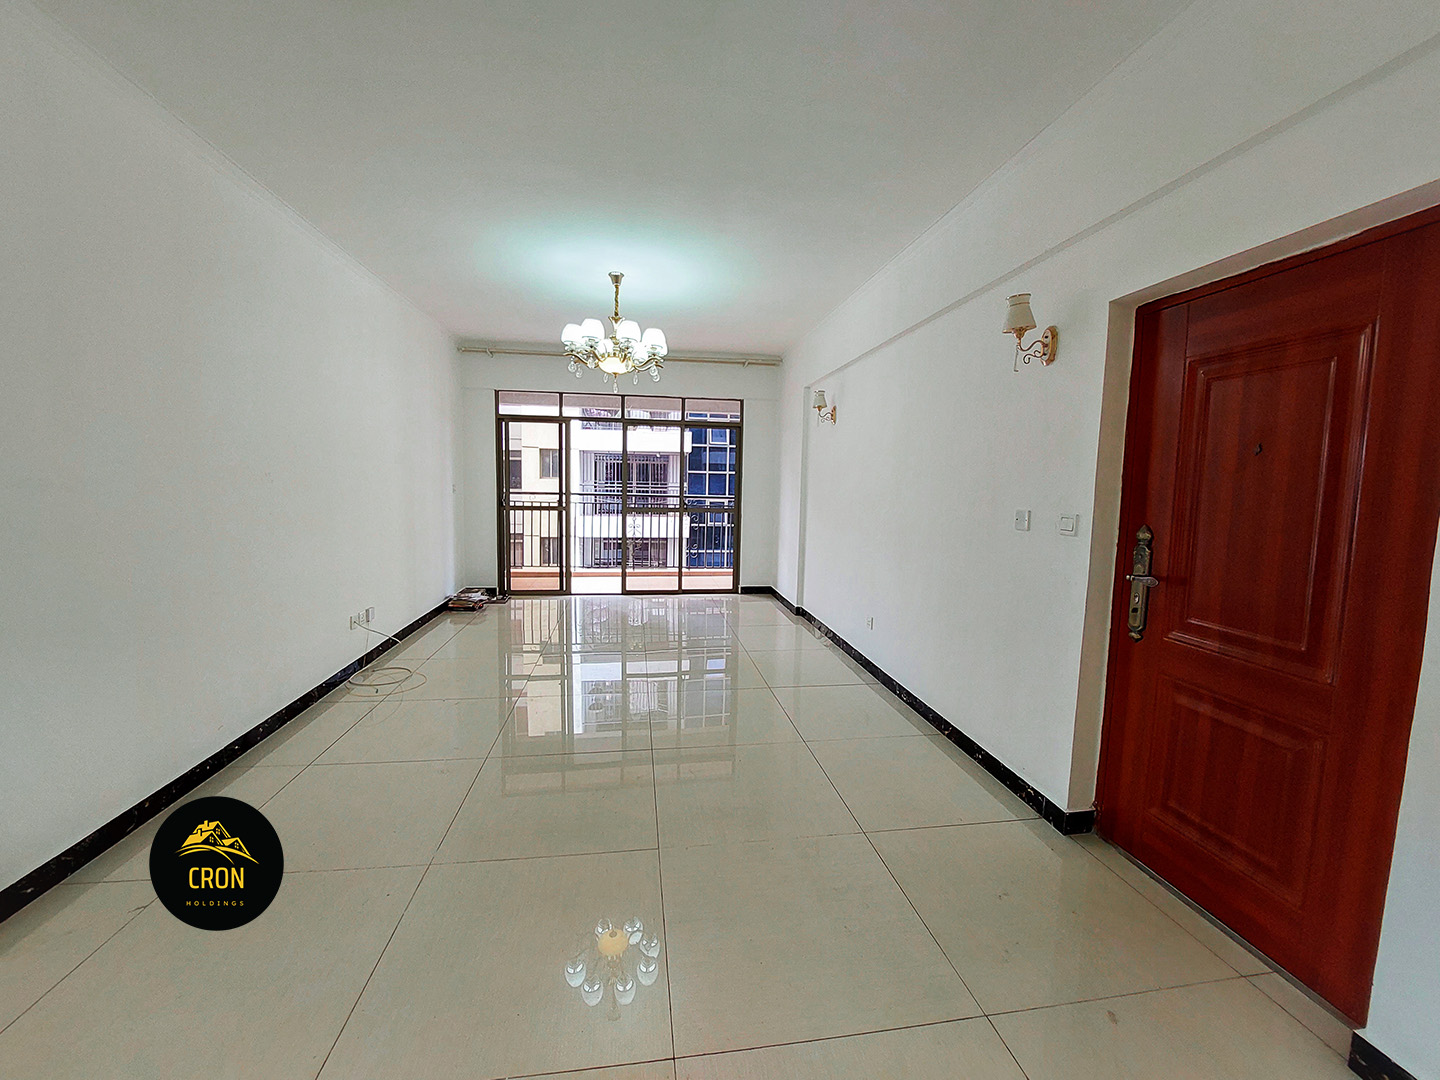 2 Bedroom Apartment For Rent Kilimani, Nairobi | Cron Holdings